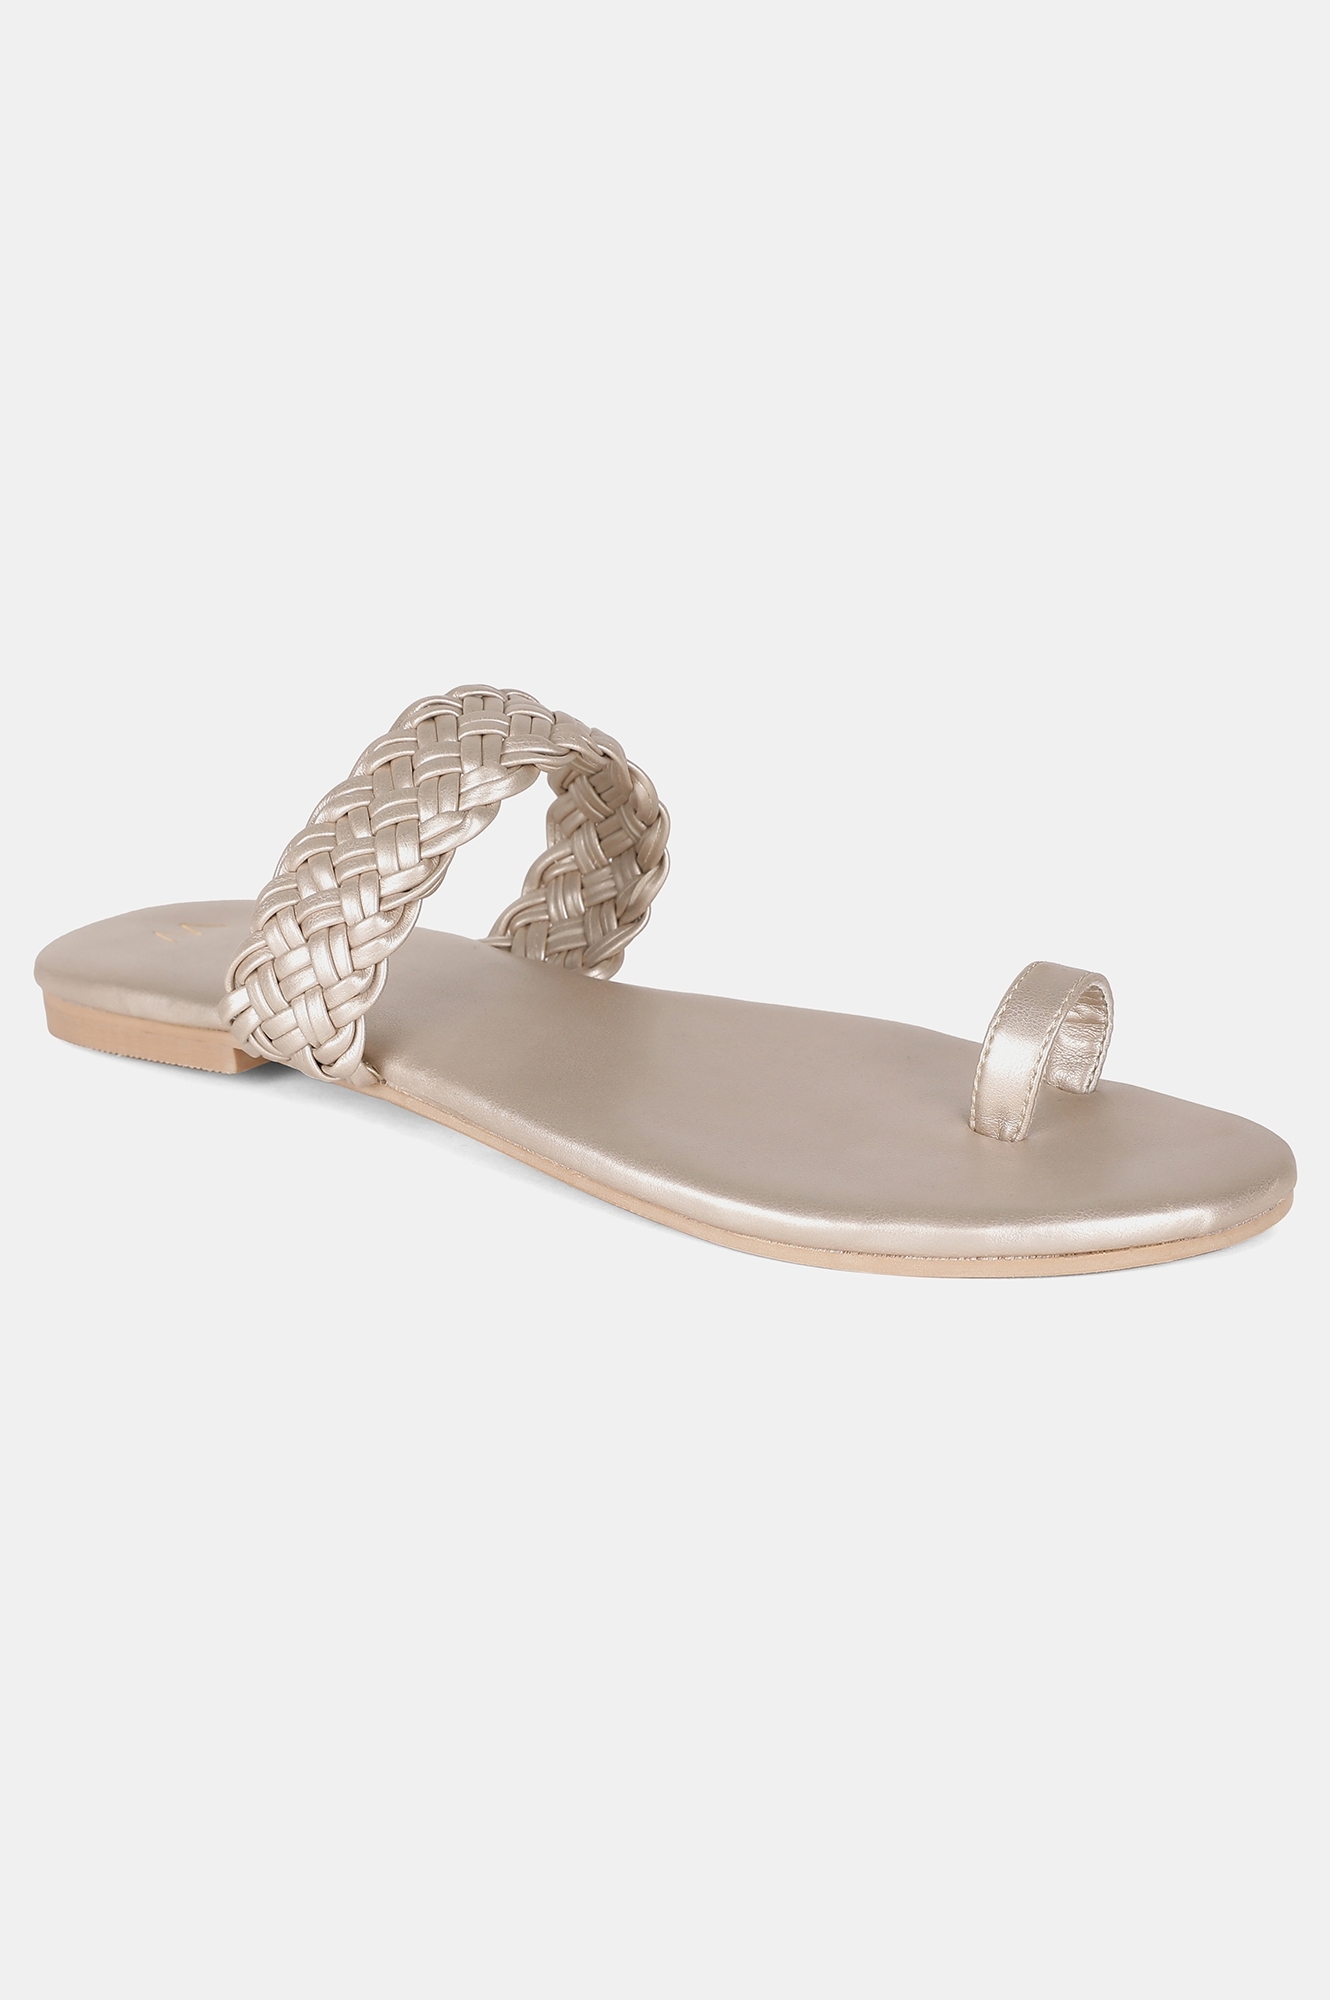 W | Gold Almond Toe Woven Design Flat